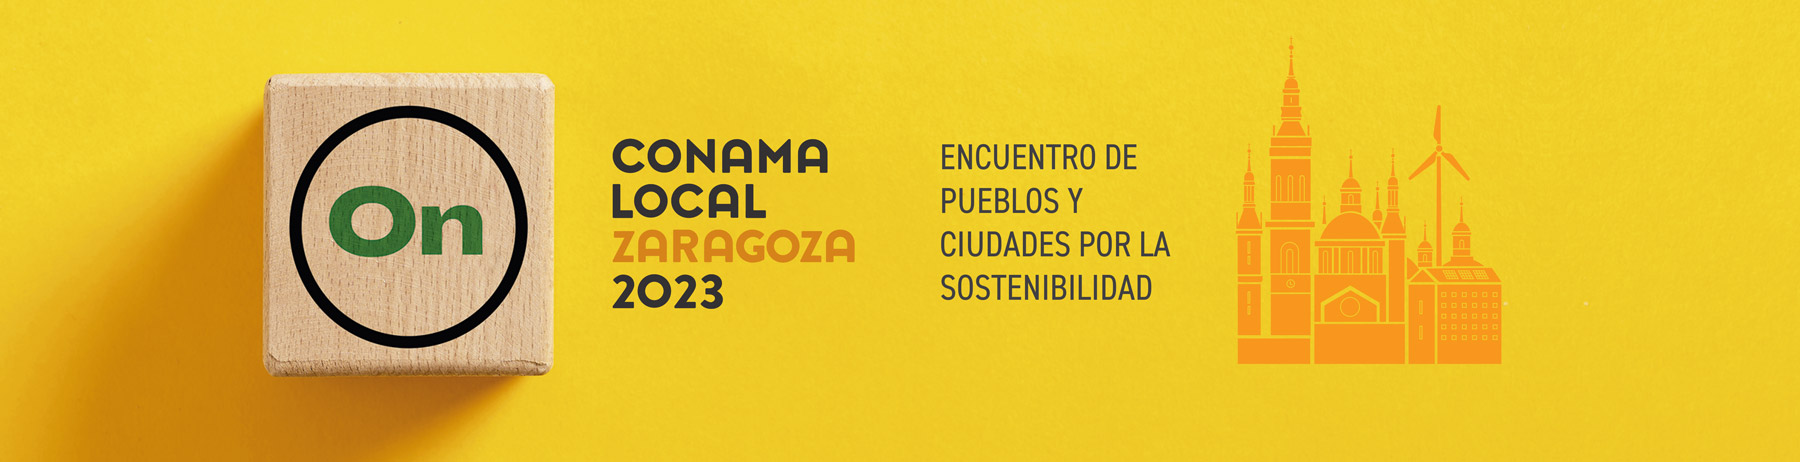 Conama local Zaragoza 2023